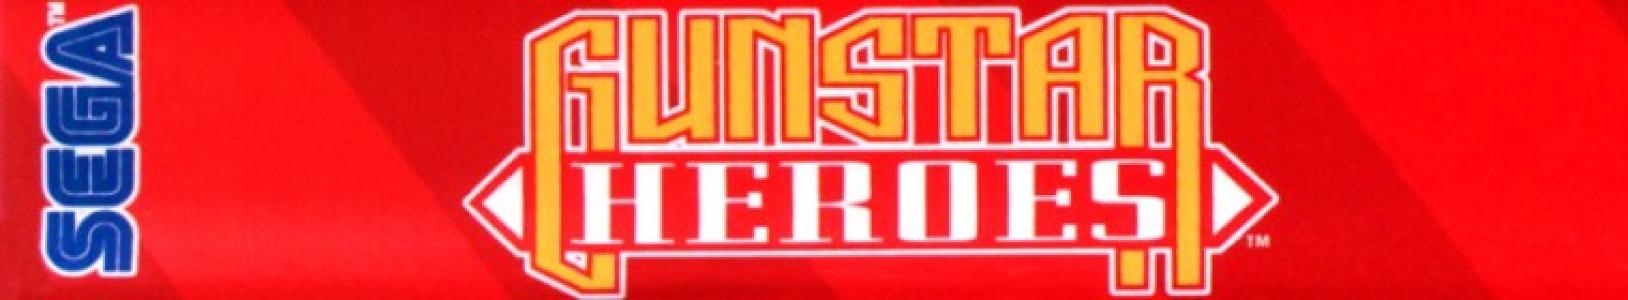 Gunstar Heroes banner